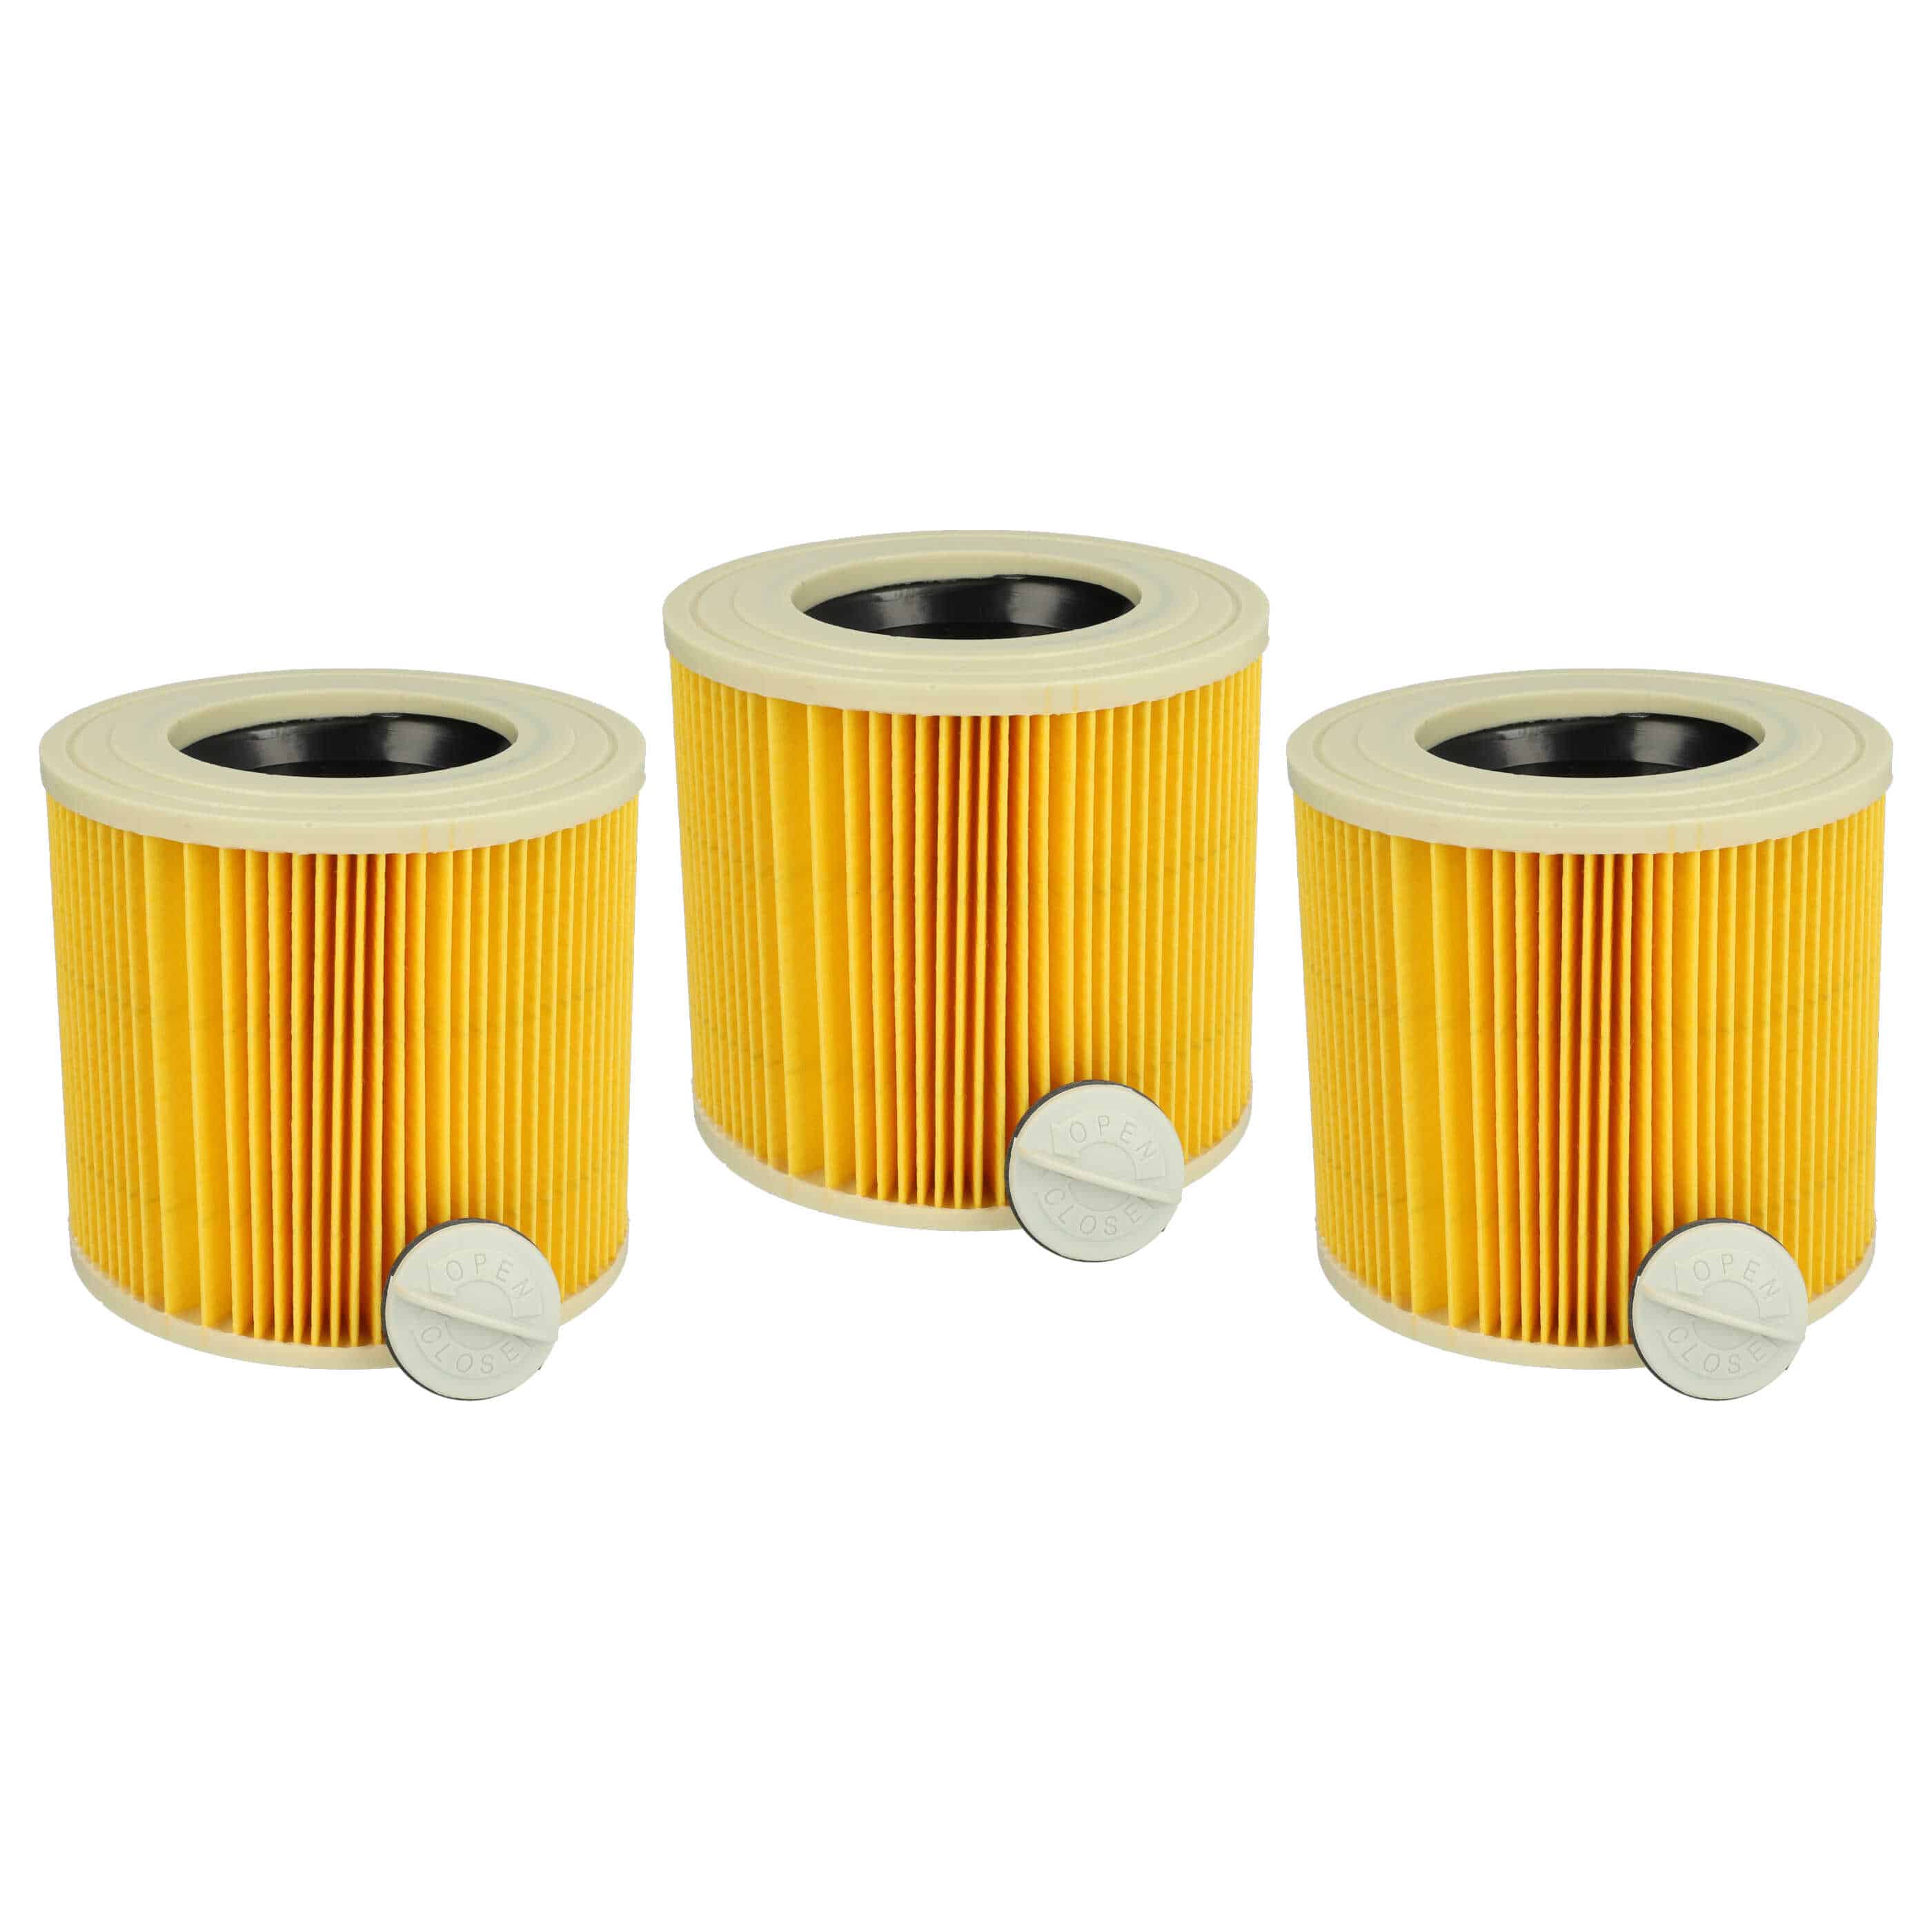 3x Filtro reemplaza Kärcher 2.863-303.0, 6.414-547.0 para aspiradora - filtro de cartucho, amarillo